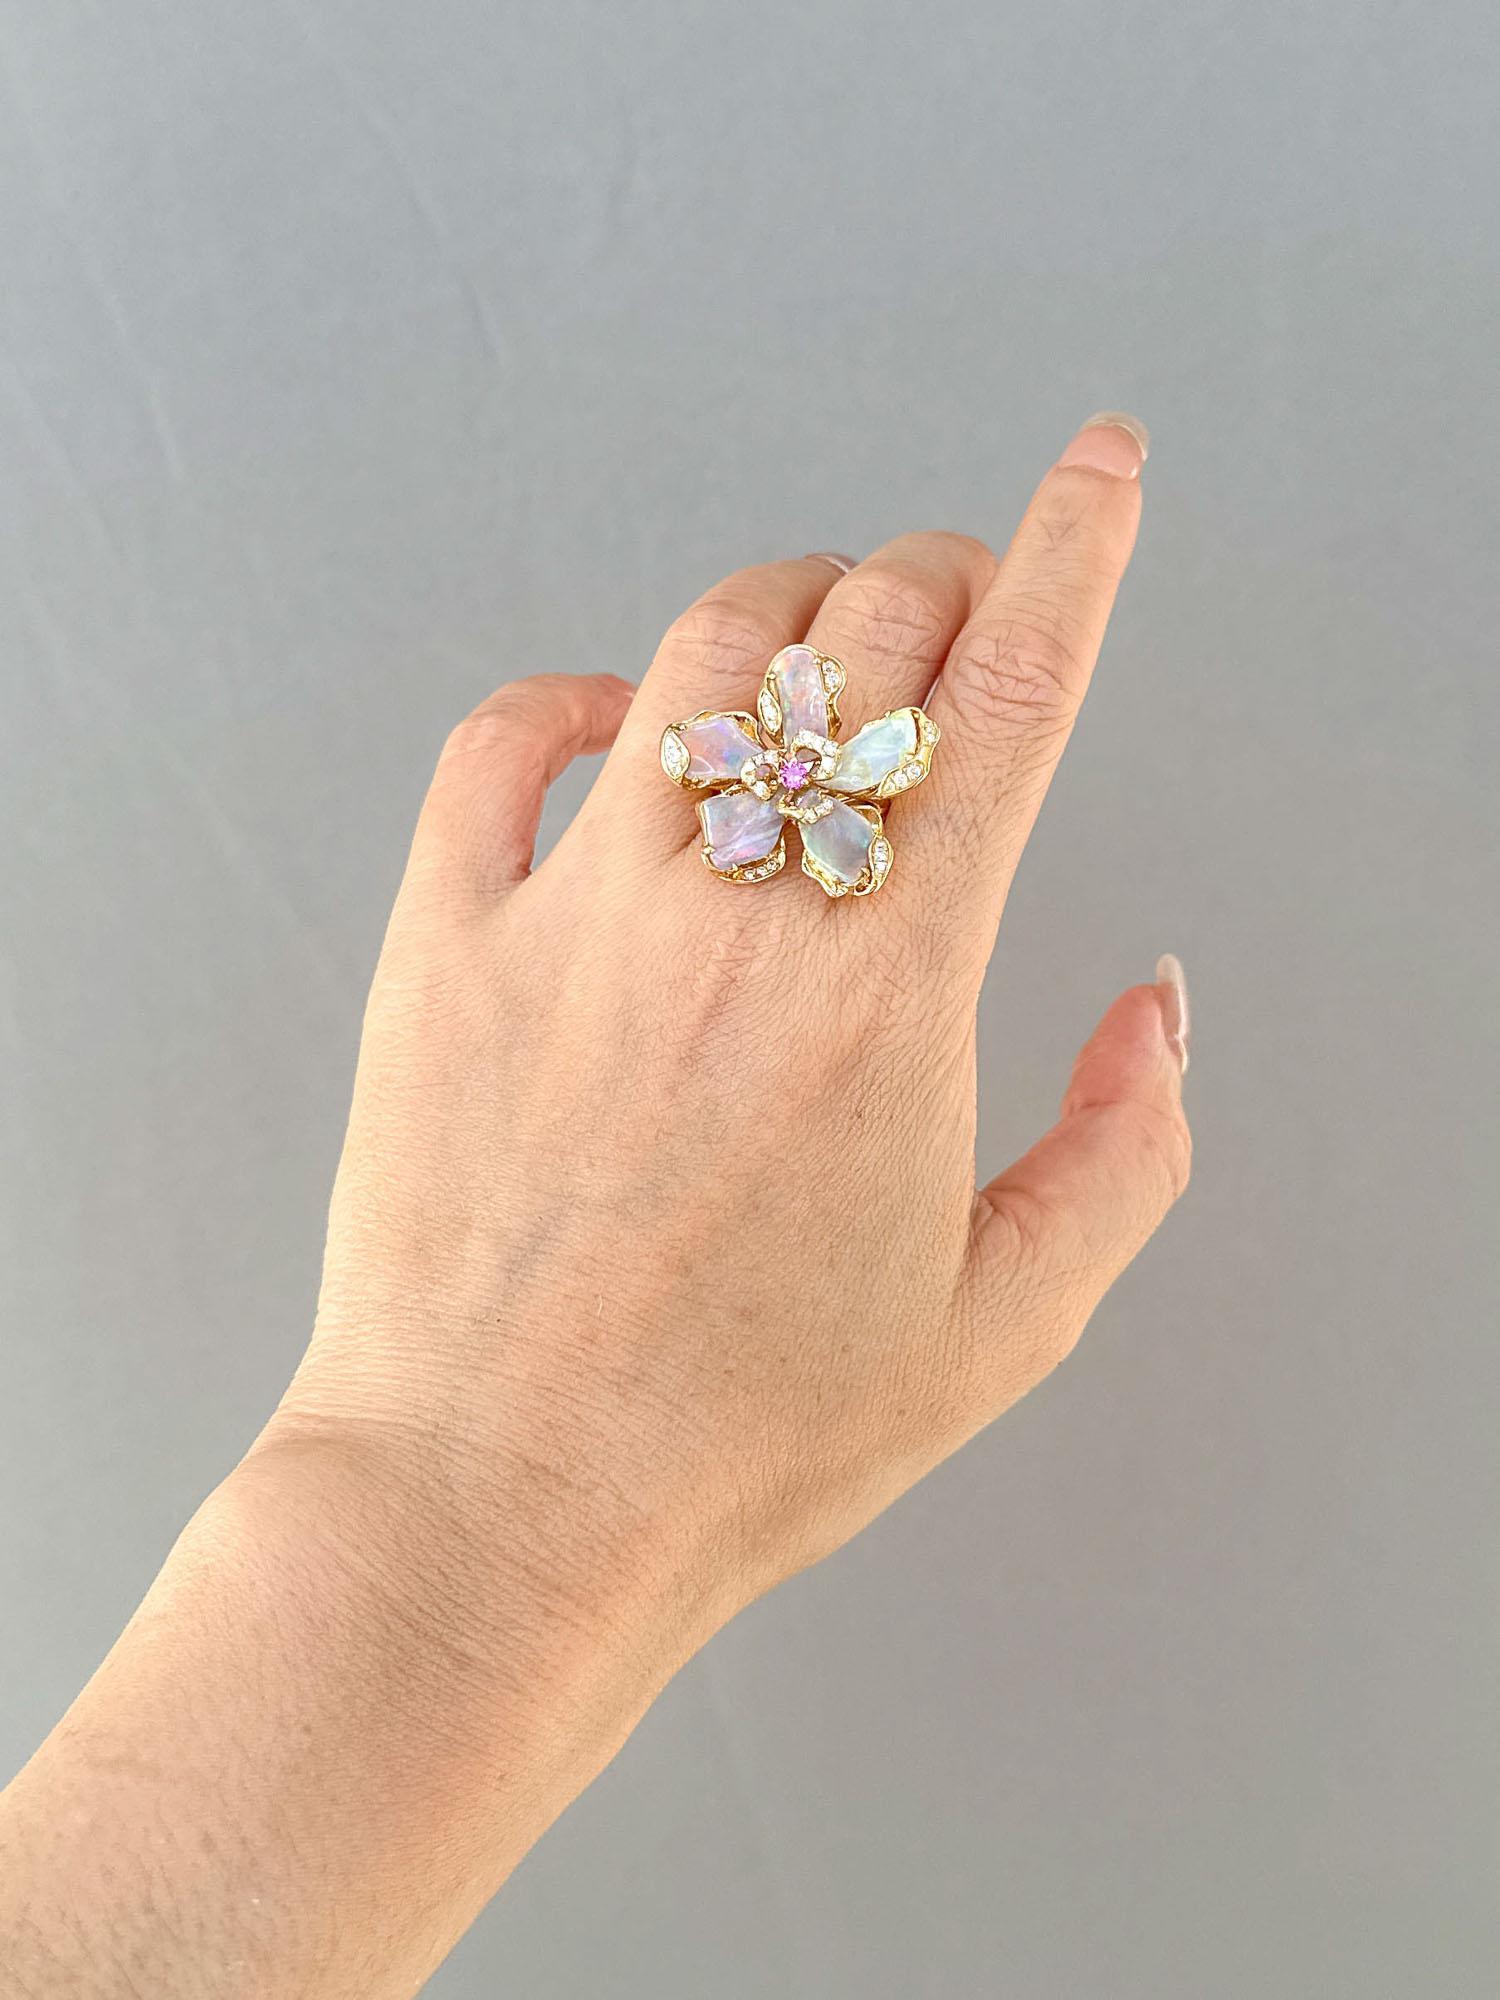 Solid Australian Opal Organic Flower Ring Pendant Conversion 18K Gold ~11g For Sale 3